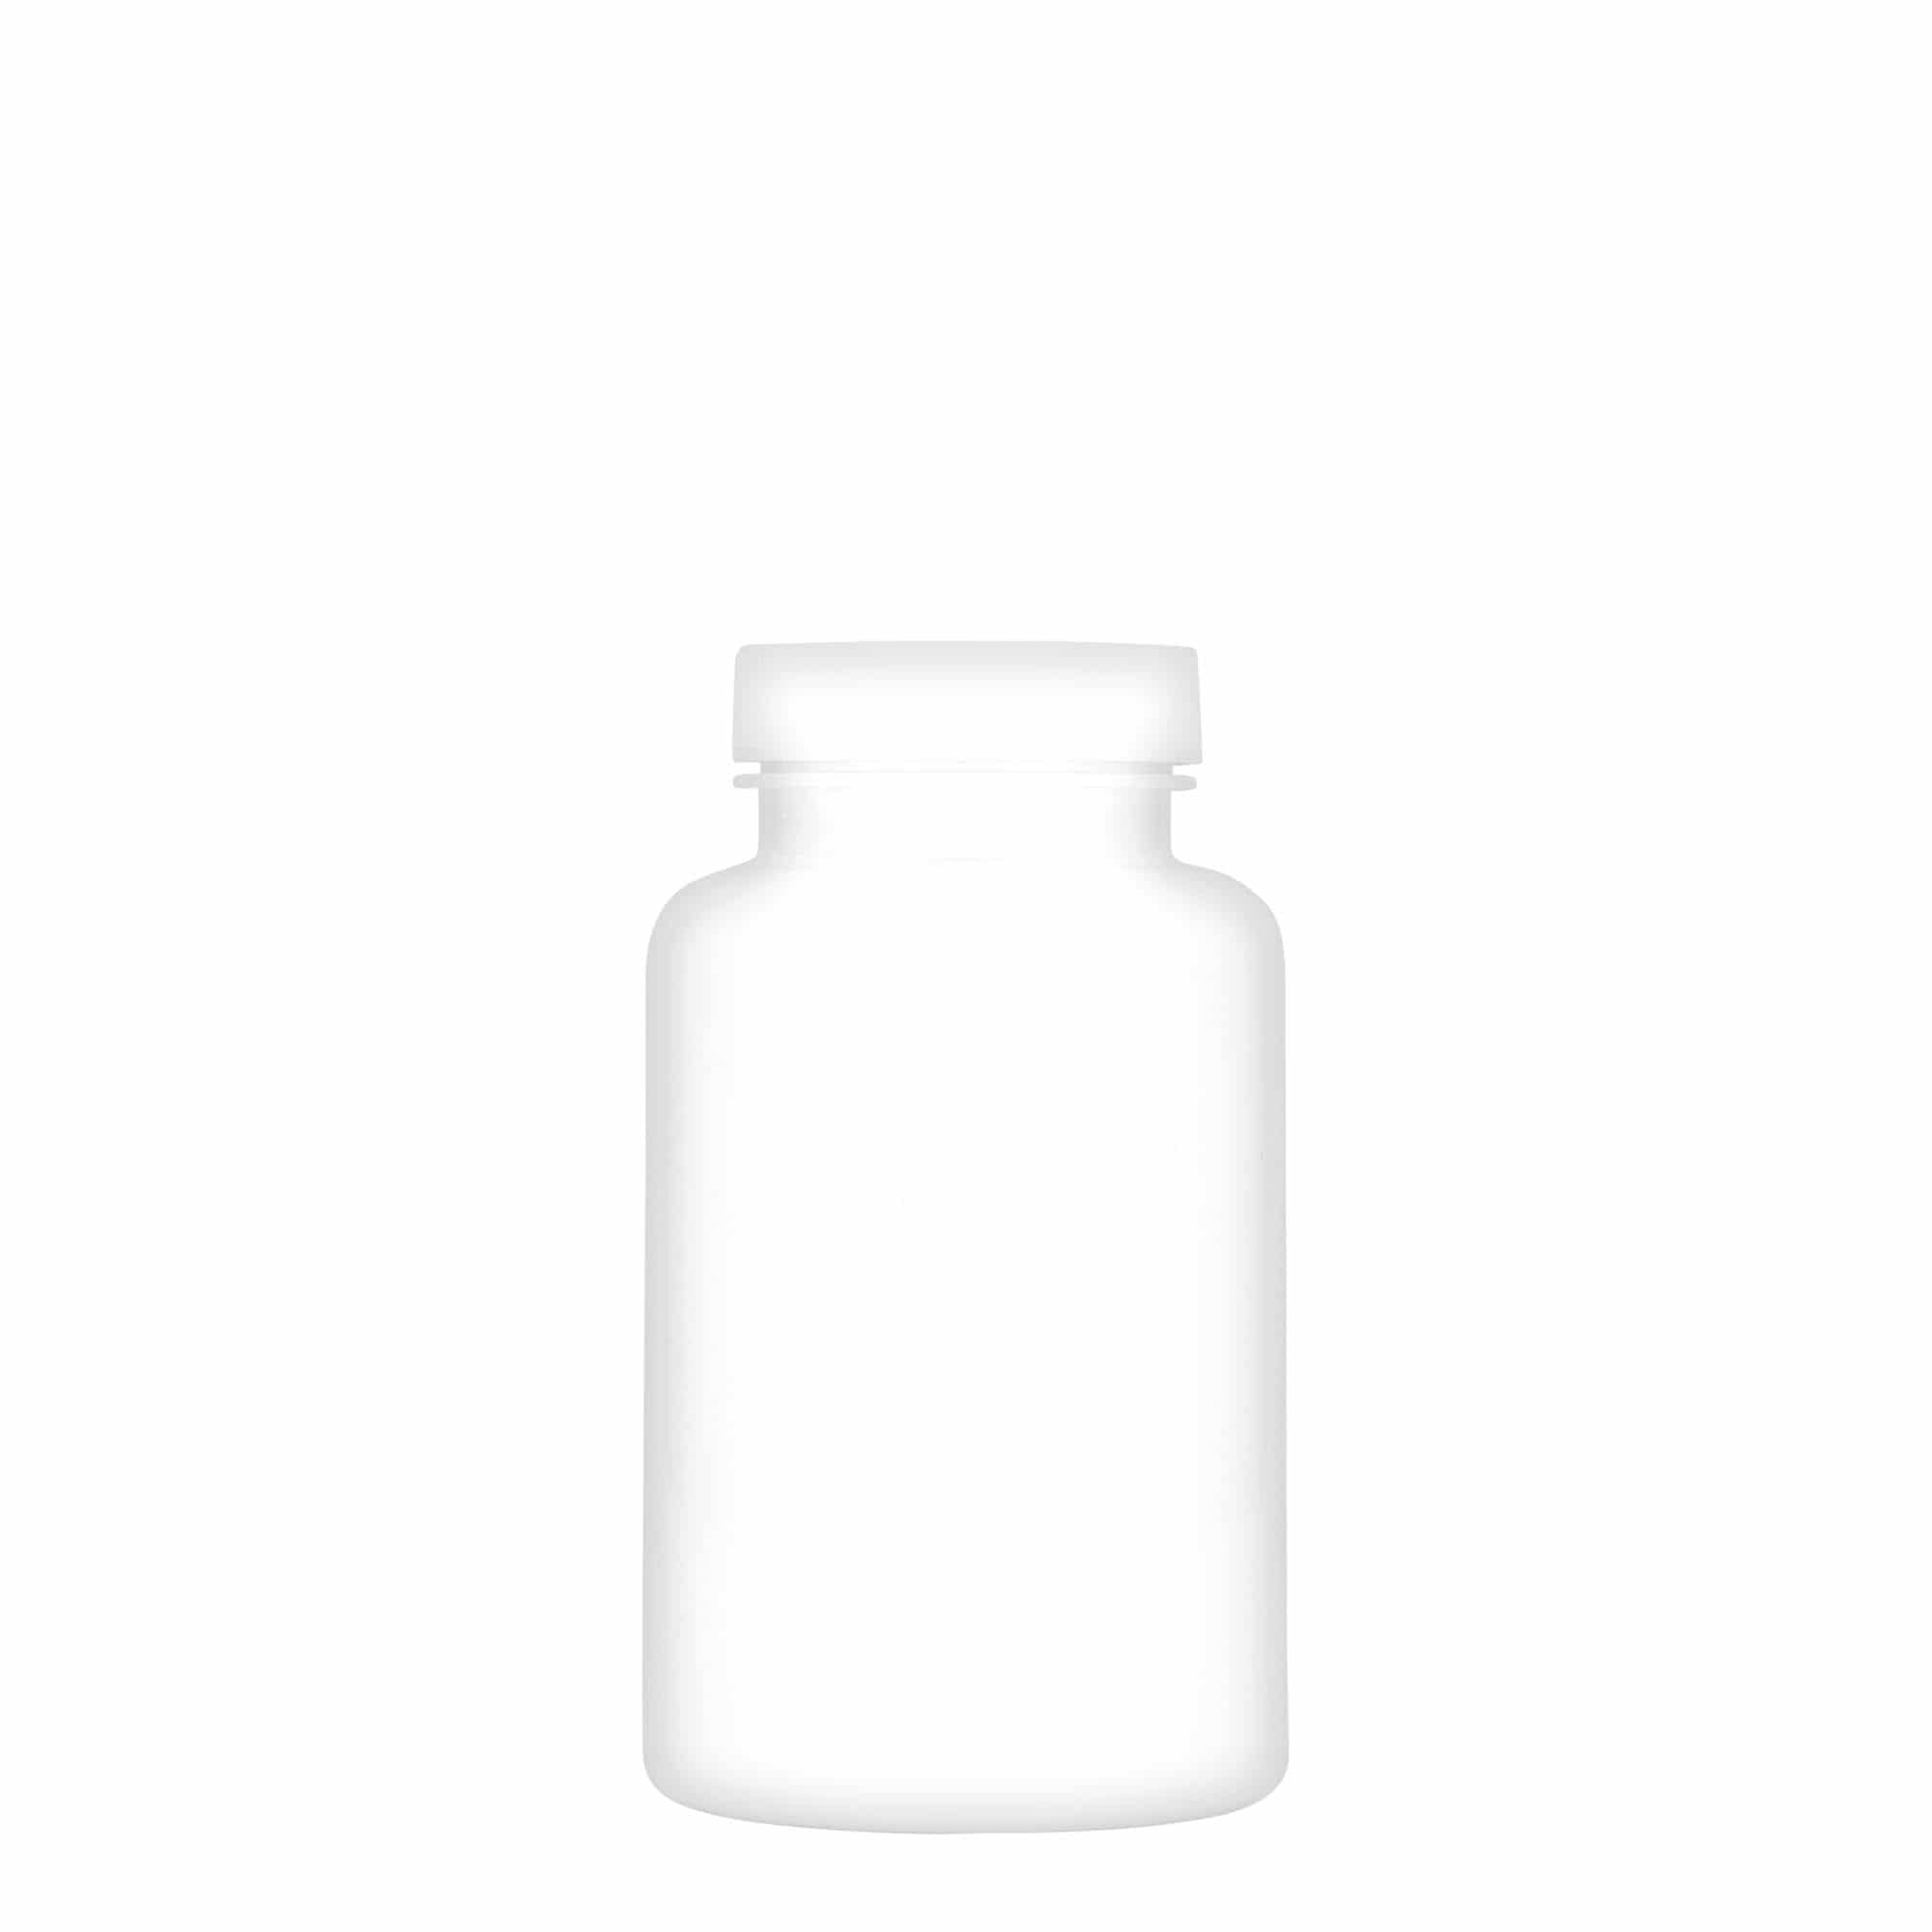 PET dóza 250 ml, plast, bílá, uzávěr: GPI 45/400